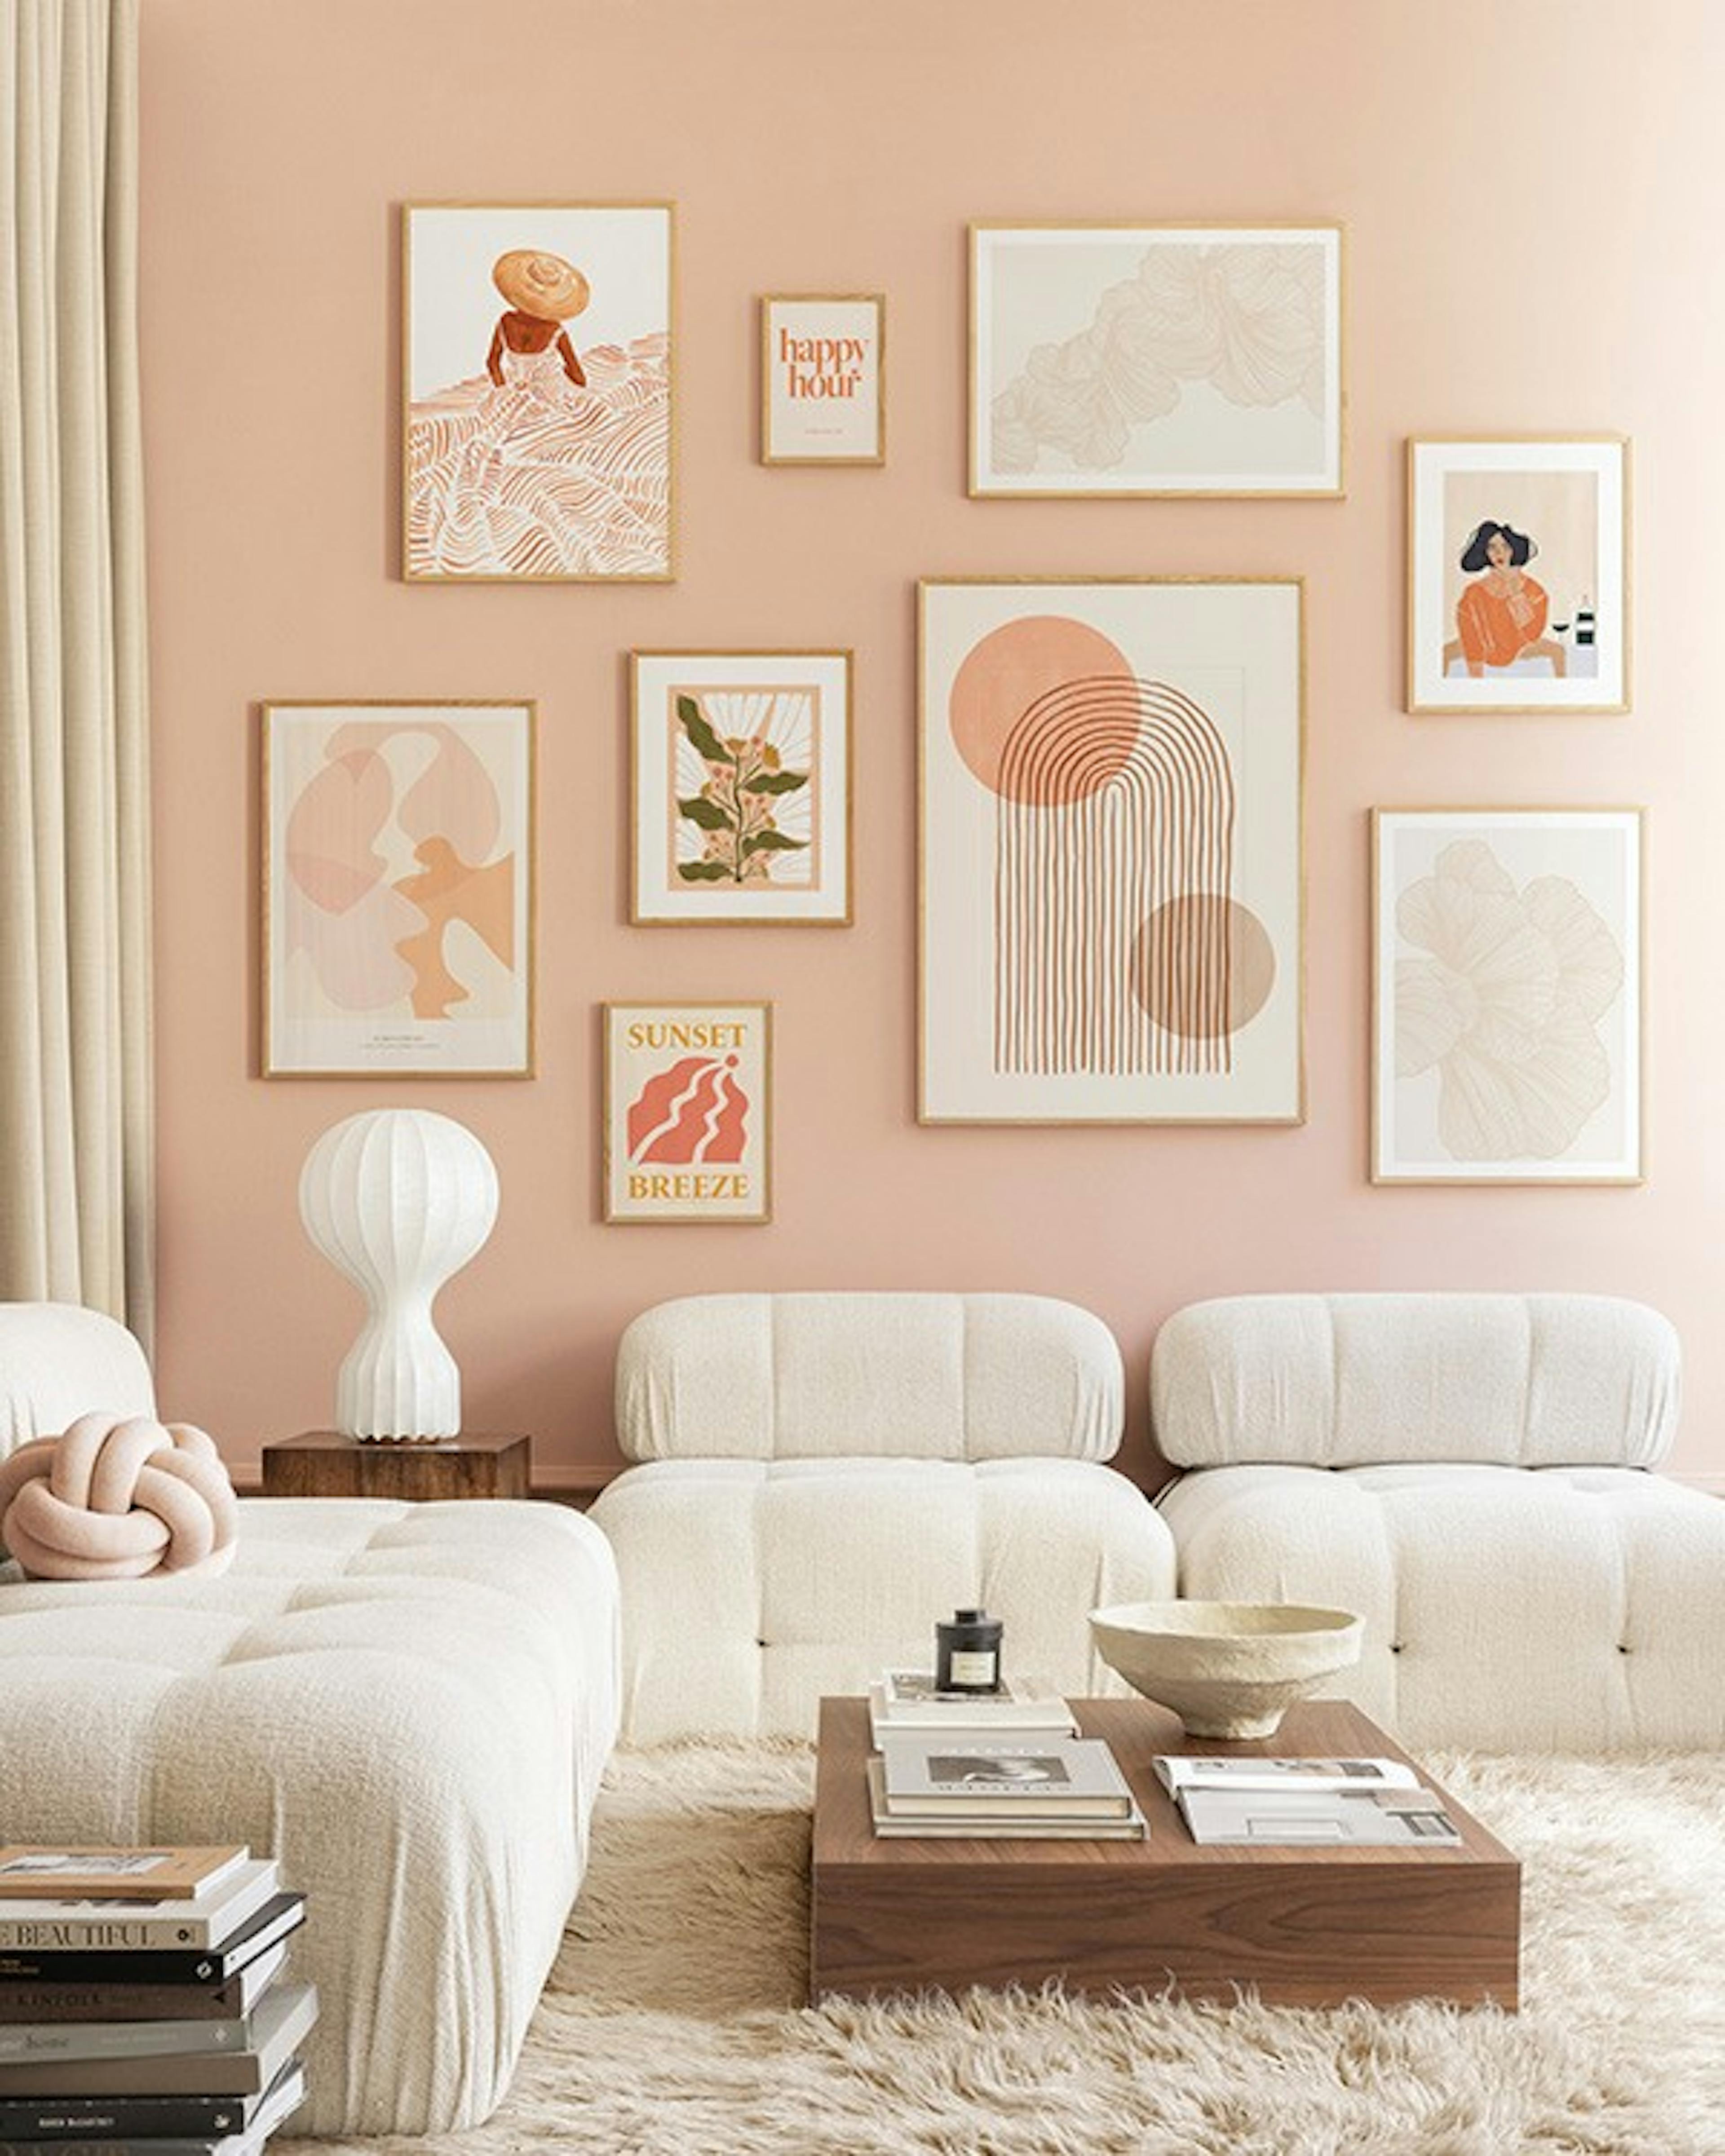 Peachy livingroom galeria obrazów